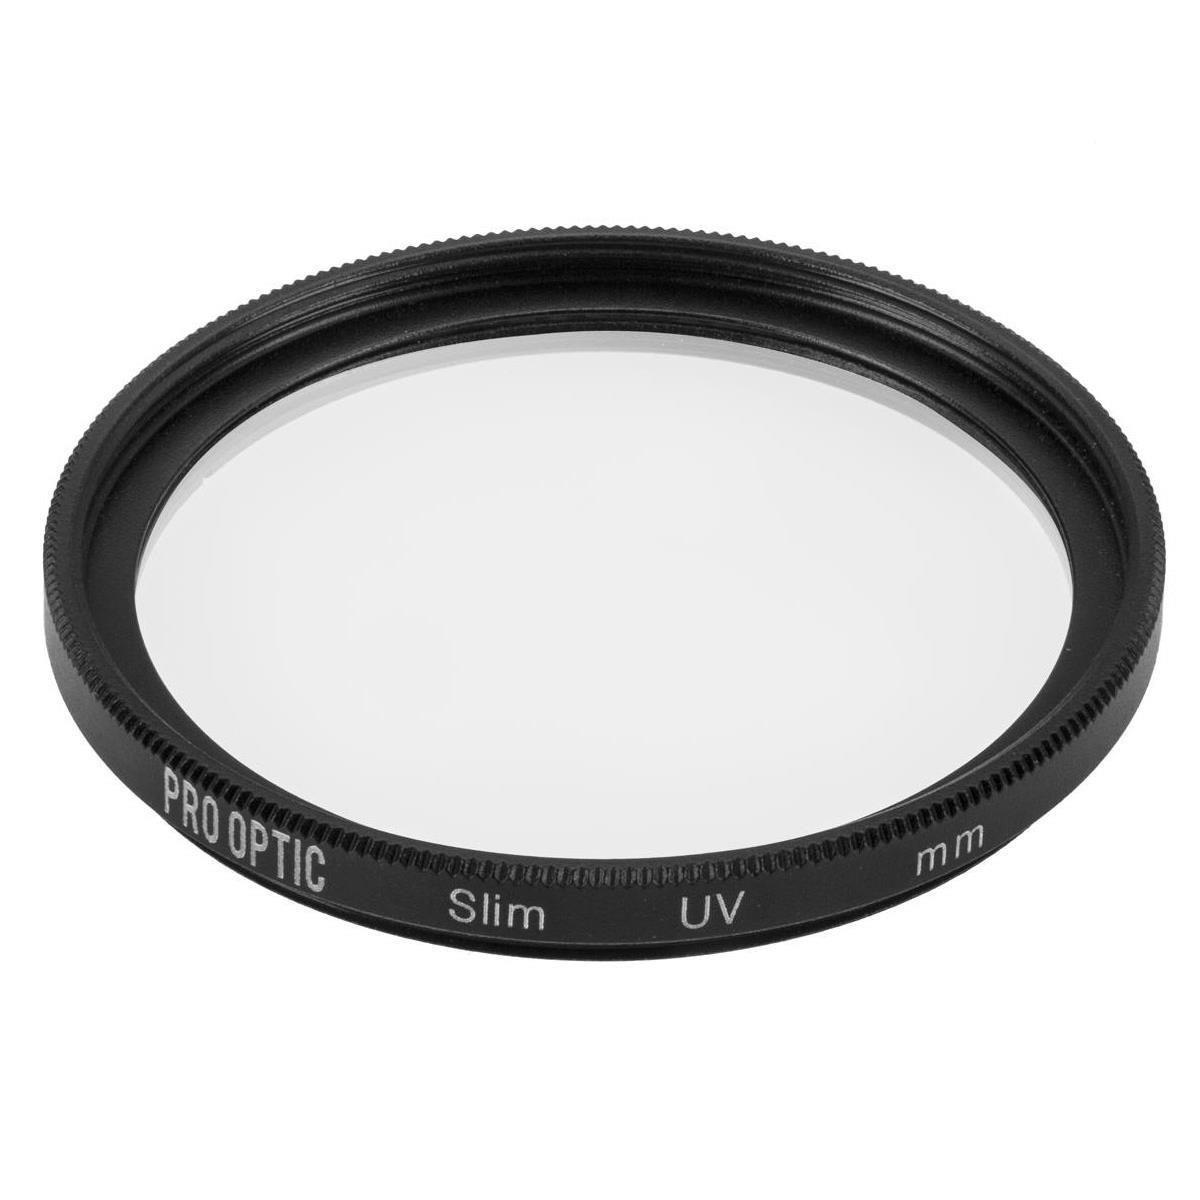 ProOPTIC Pro Digital 62mm Multi Coated UV Slim Filter цена и фото